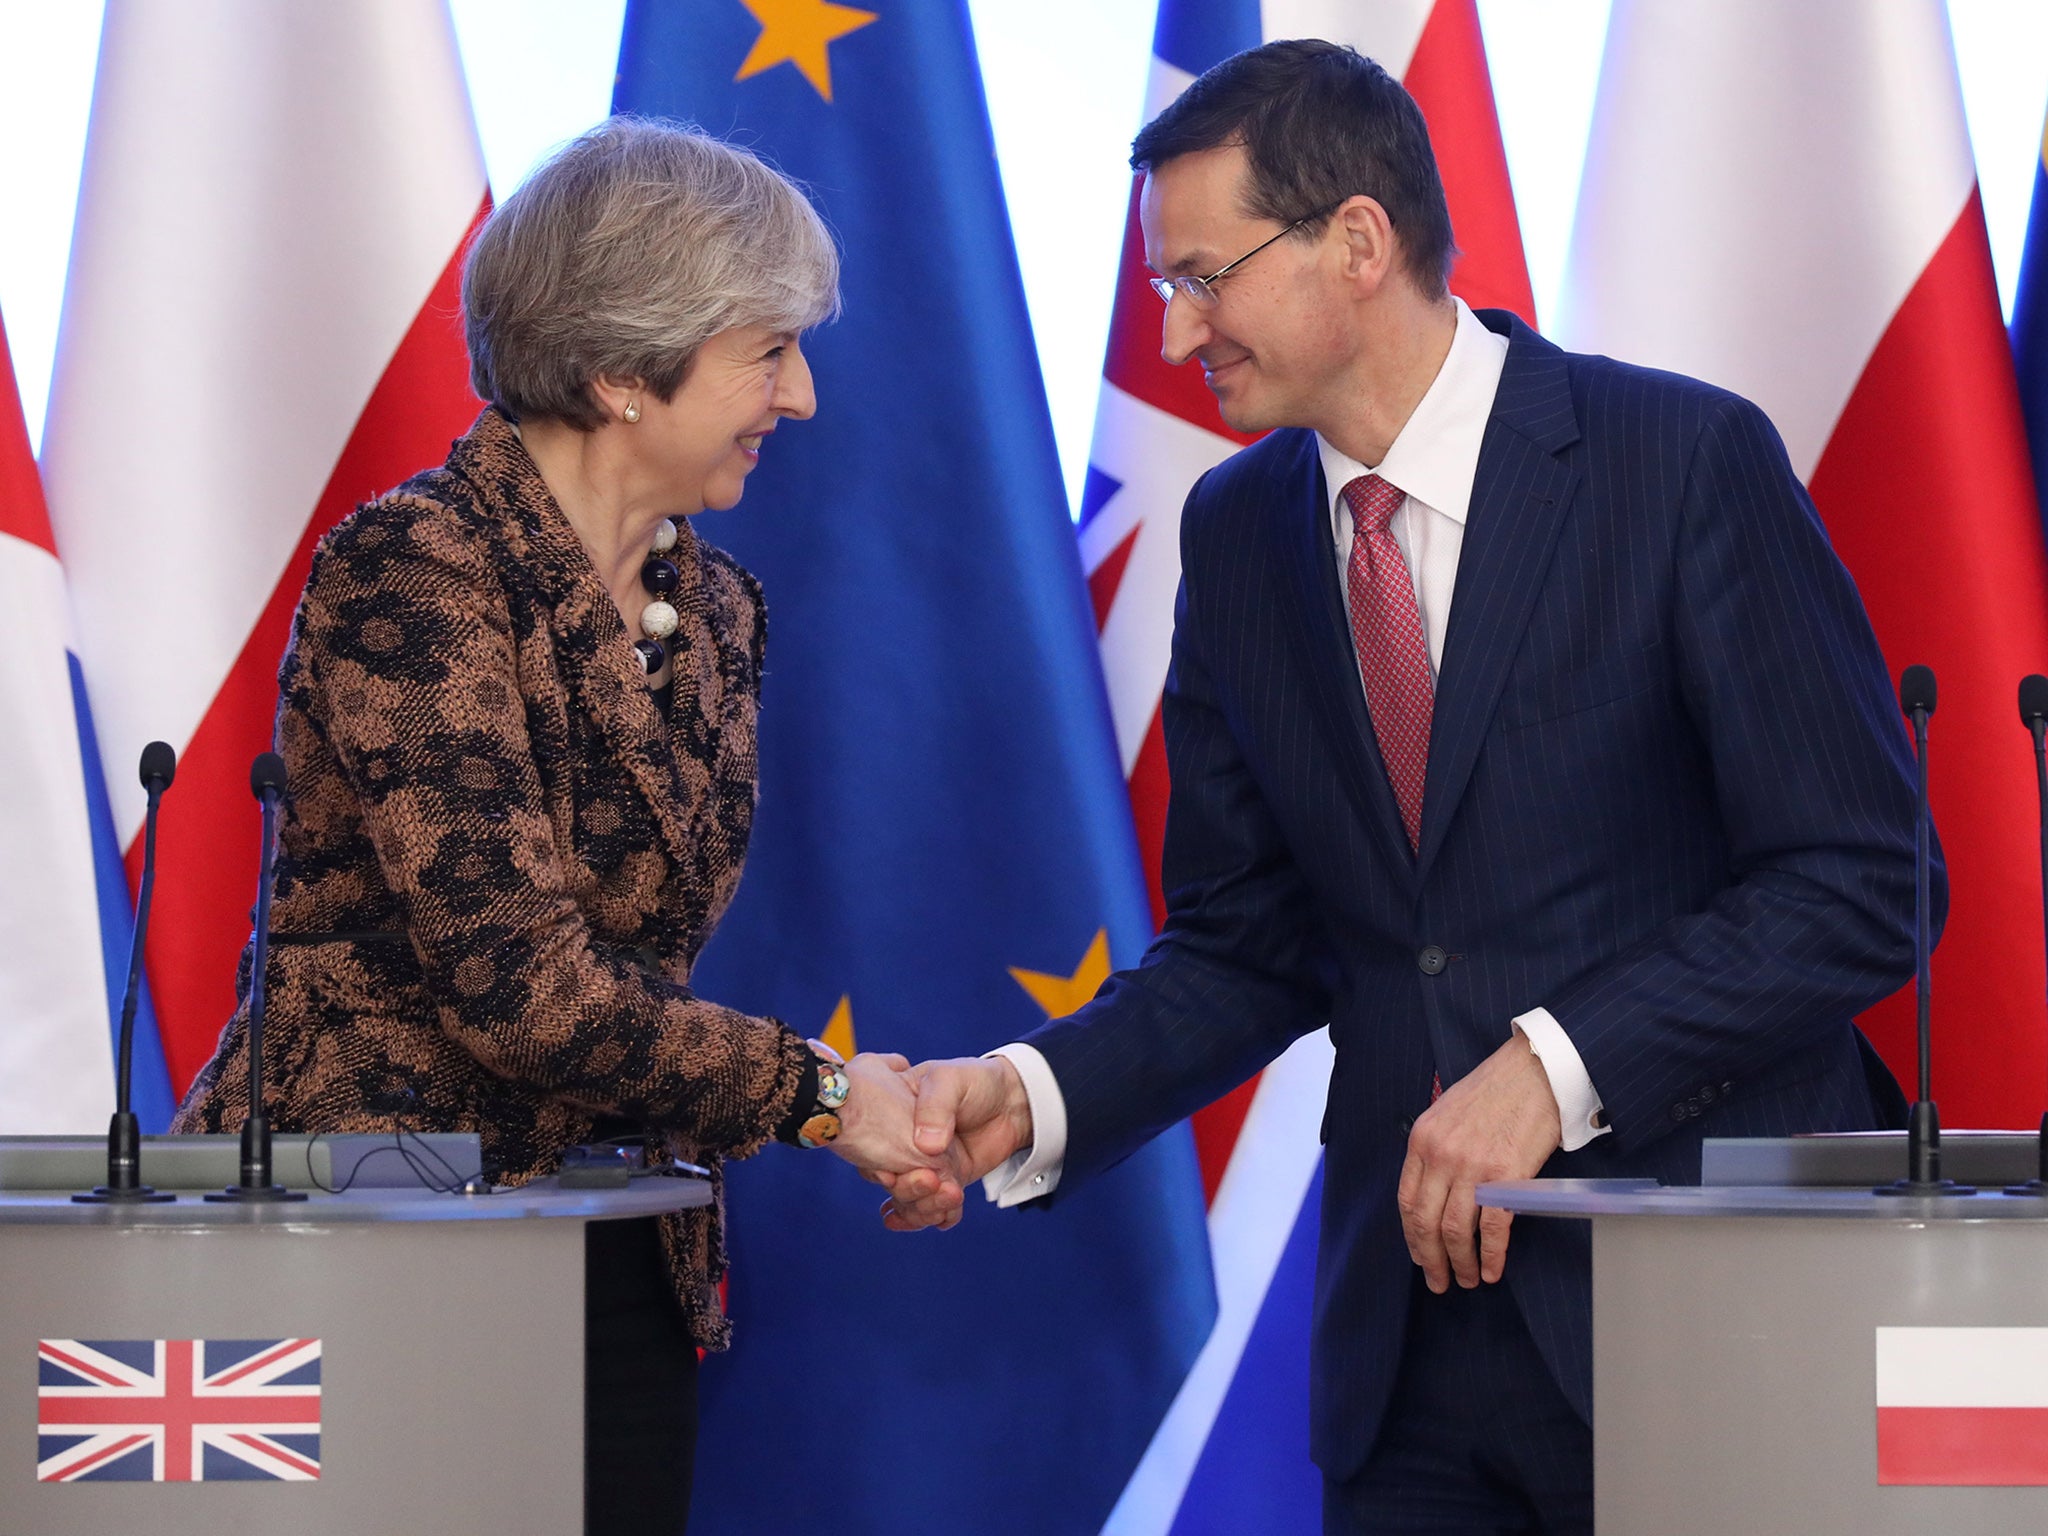 Poland’s prime minister Mateusz Morawiecki and Theresa May shake hands